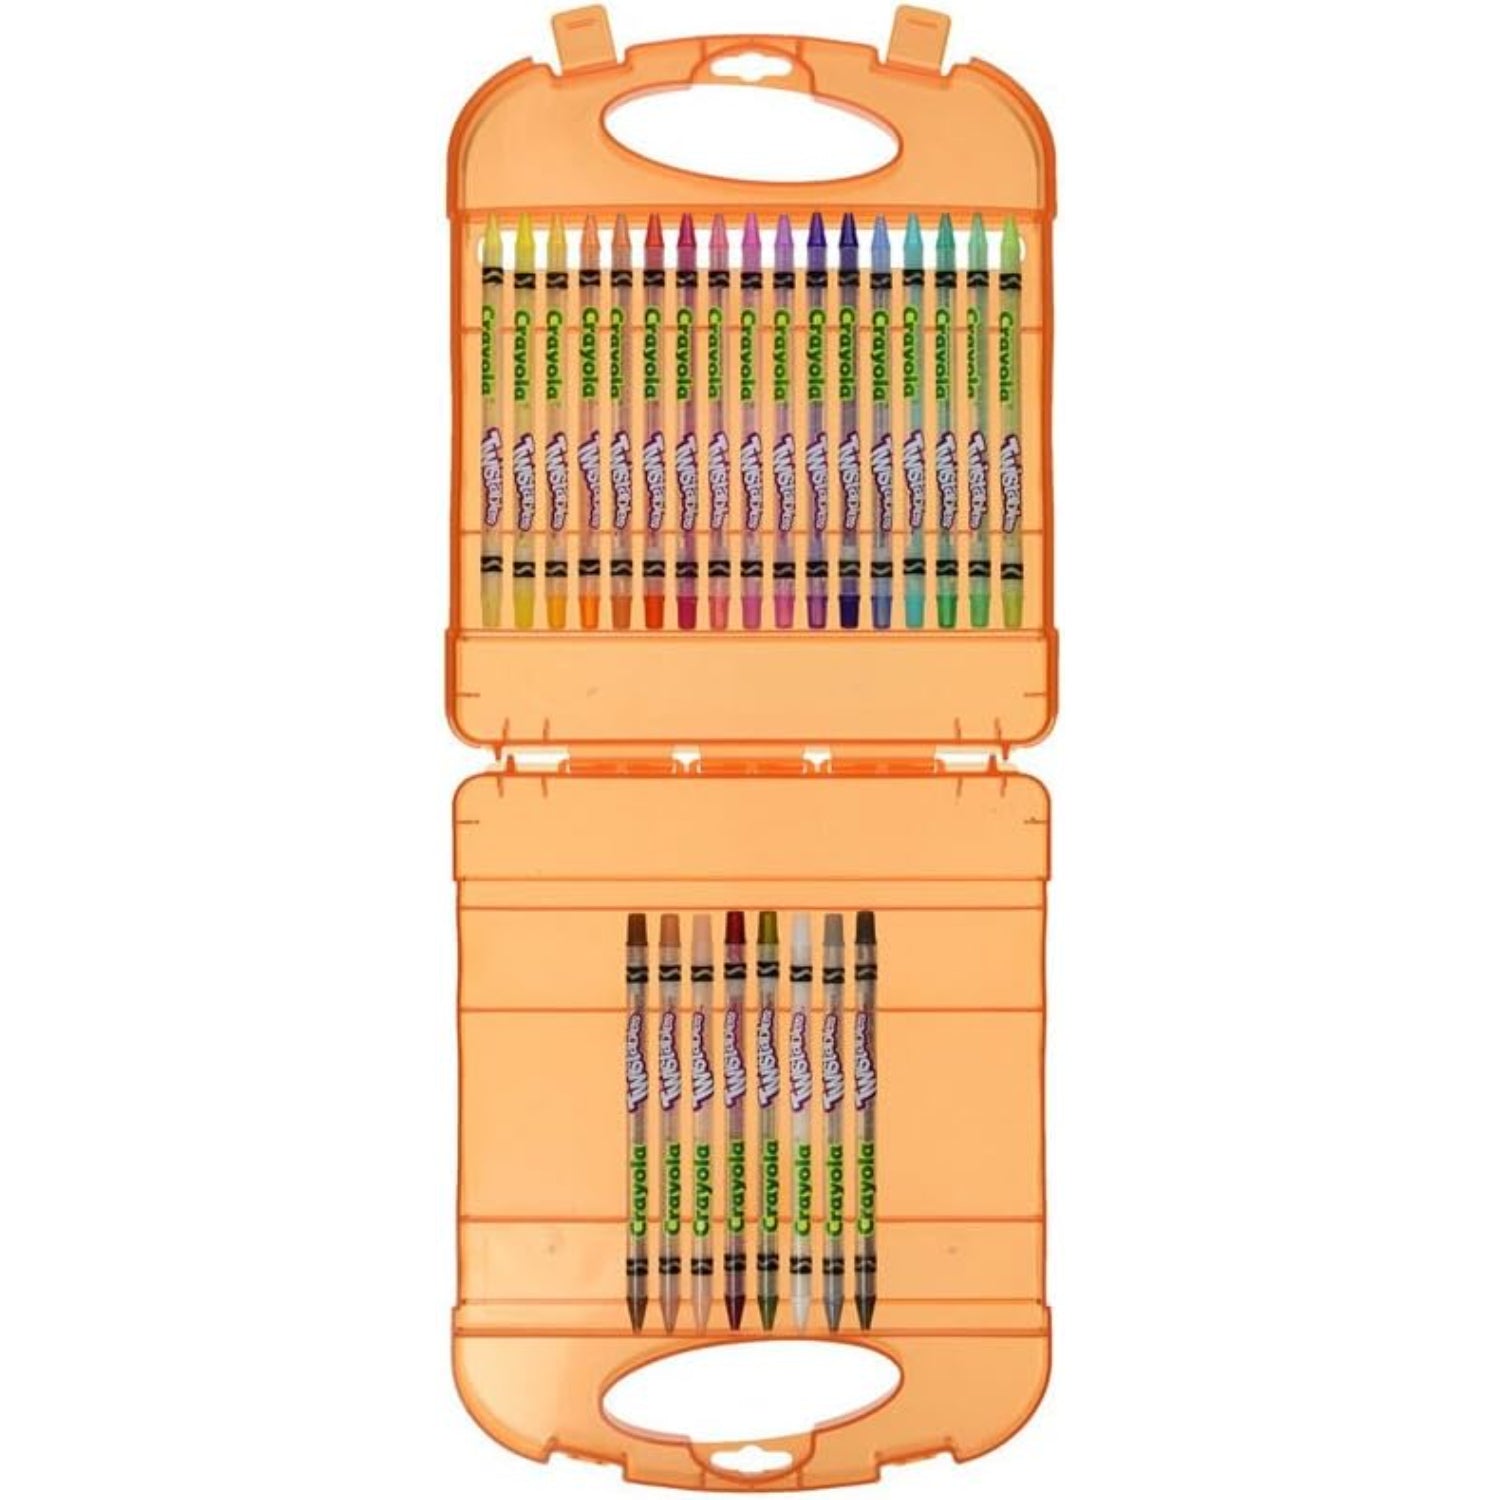 Crayola Twistables Colored Pencil Kit- - 071662952259